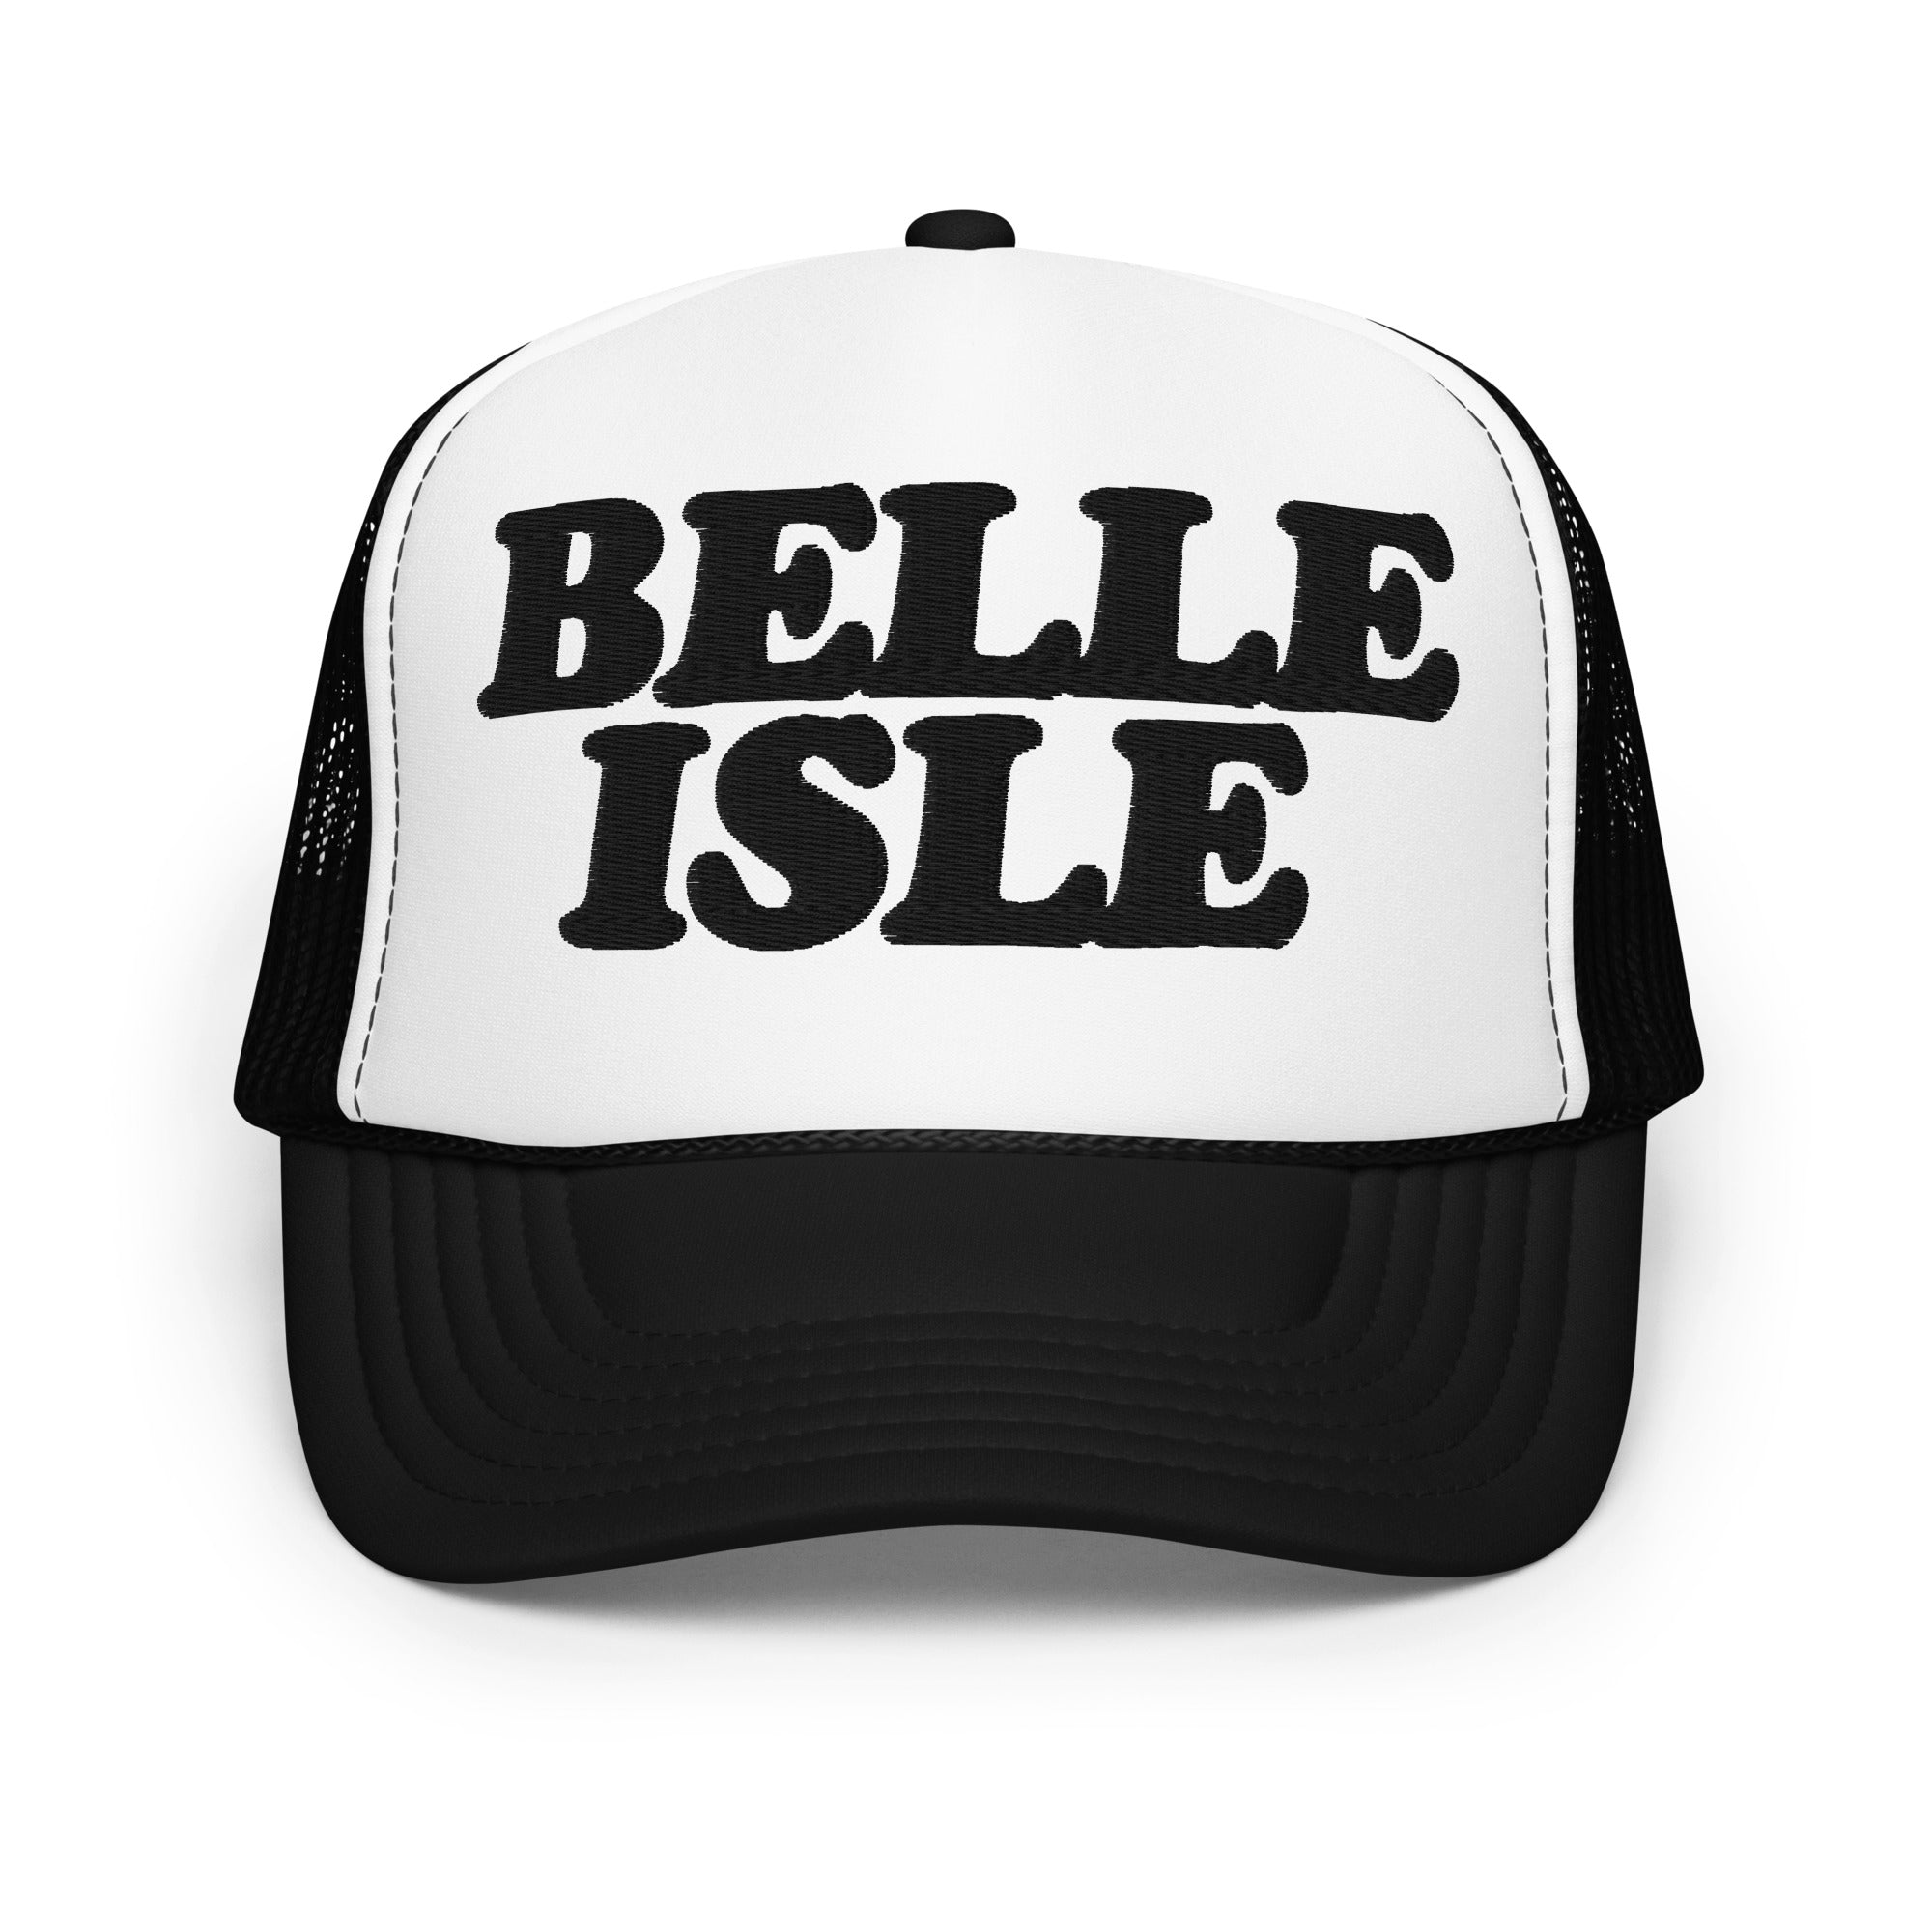 Belle Isle Foam Trucker Hat - Embroidered - Black / White  Default Title  